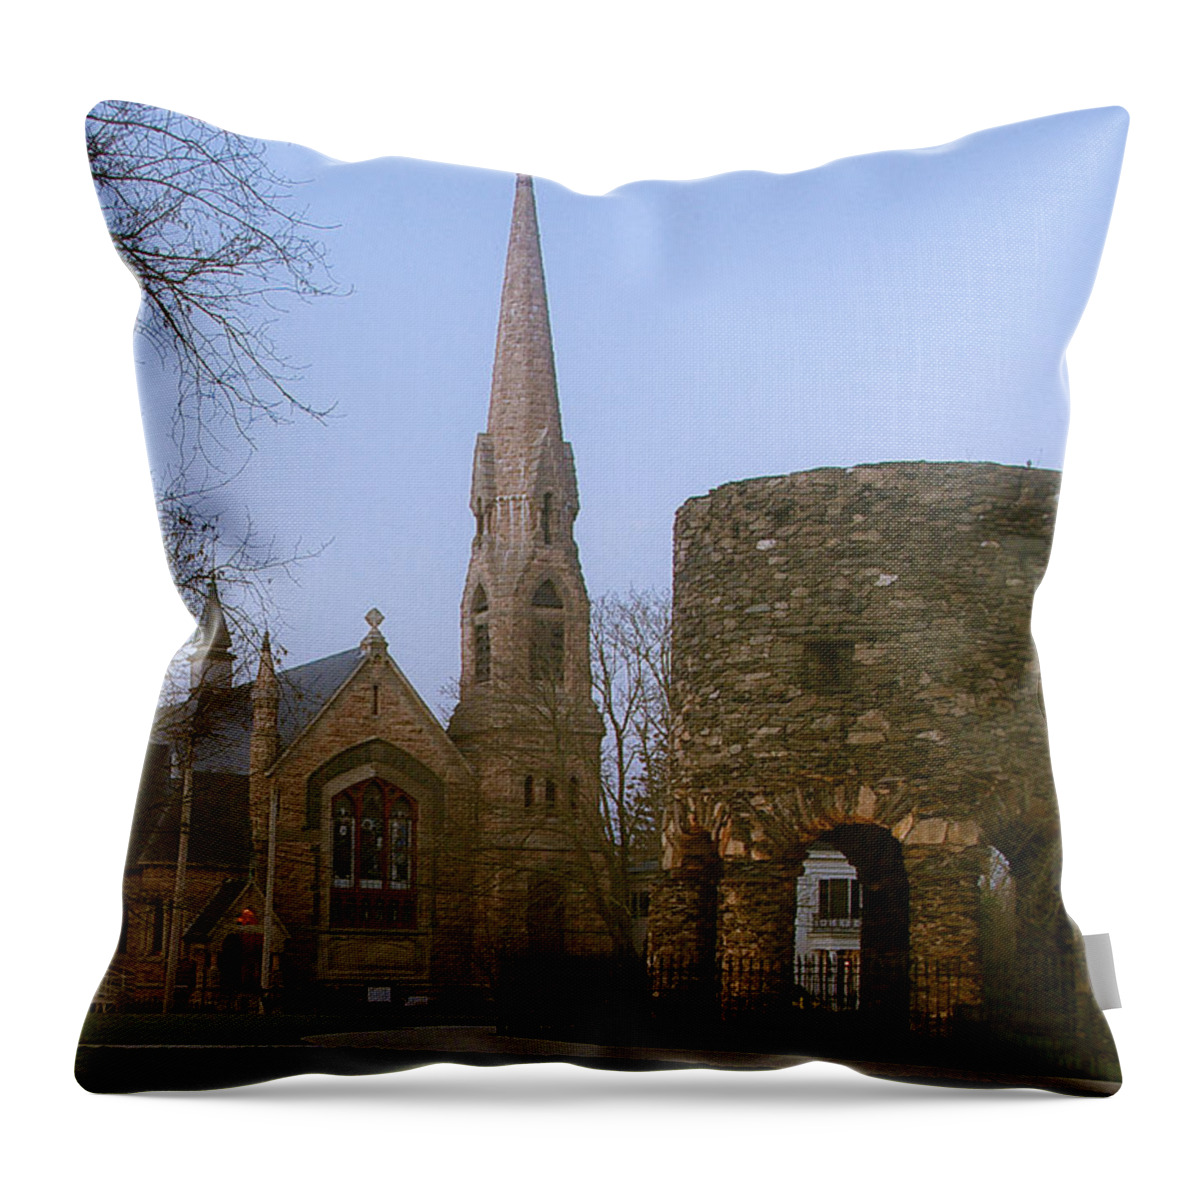 Church Throw Pillow featuring the photograph Channing Memorial Church by Steven Natanson